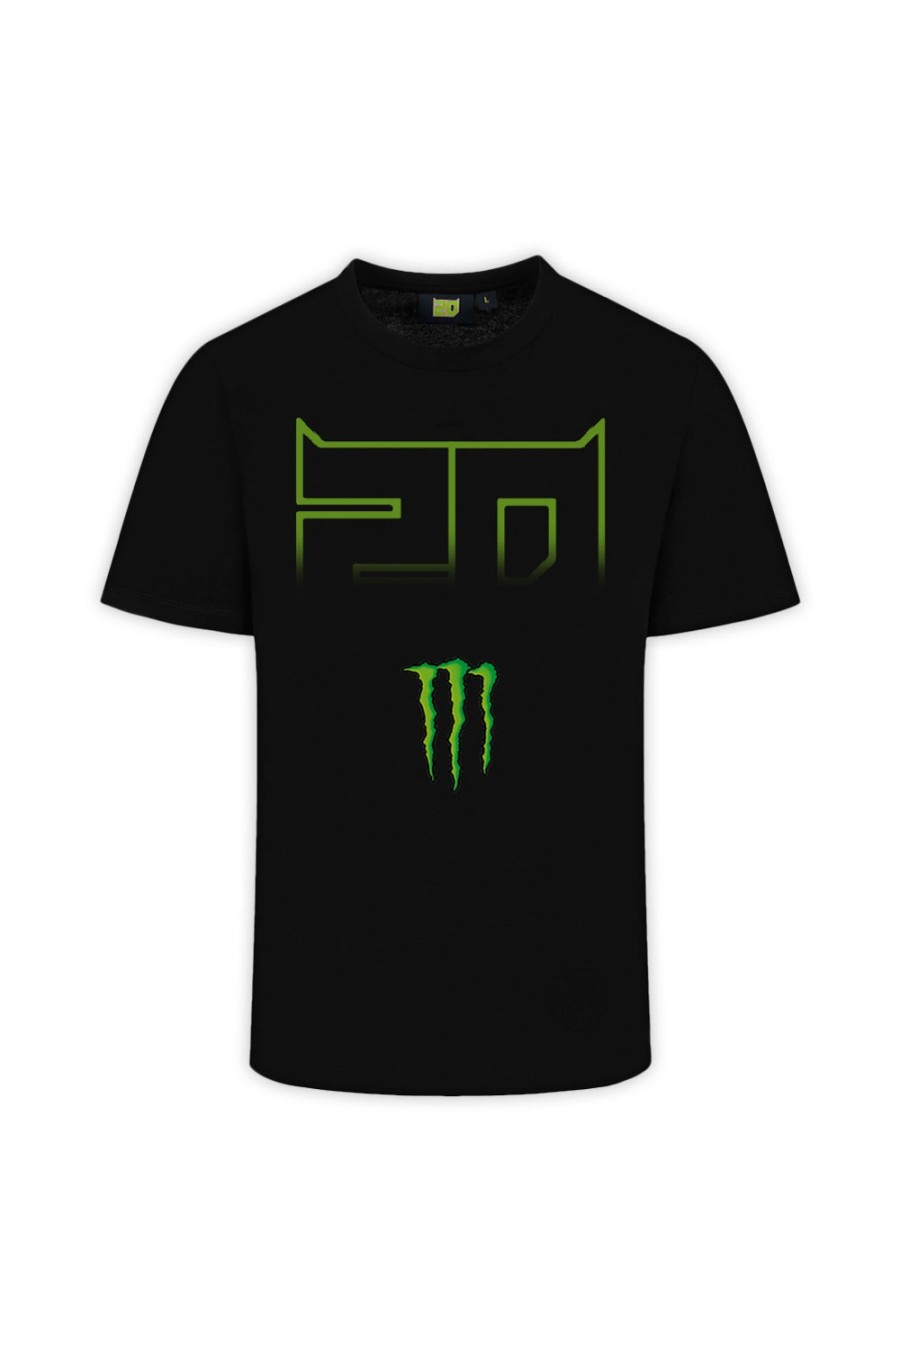 Fabio Quartararo 20 Monster-T-Shirt